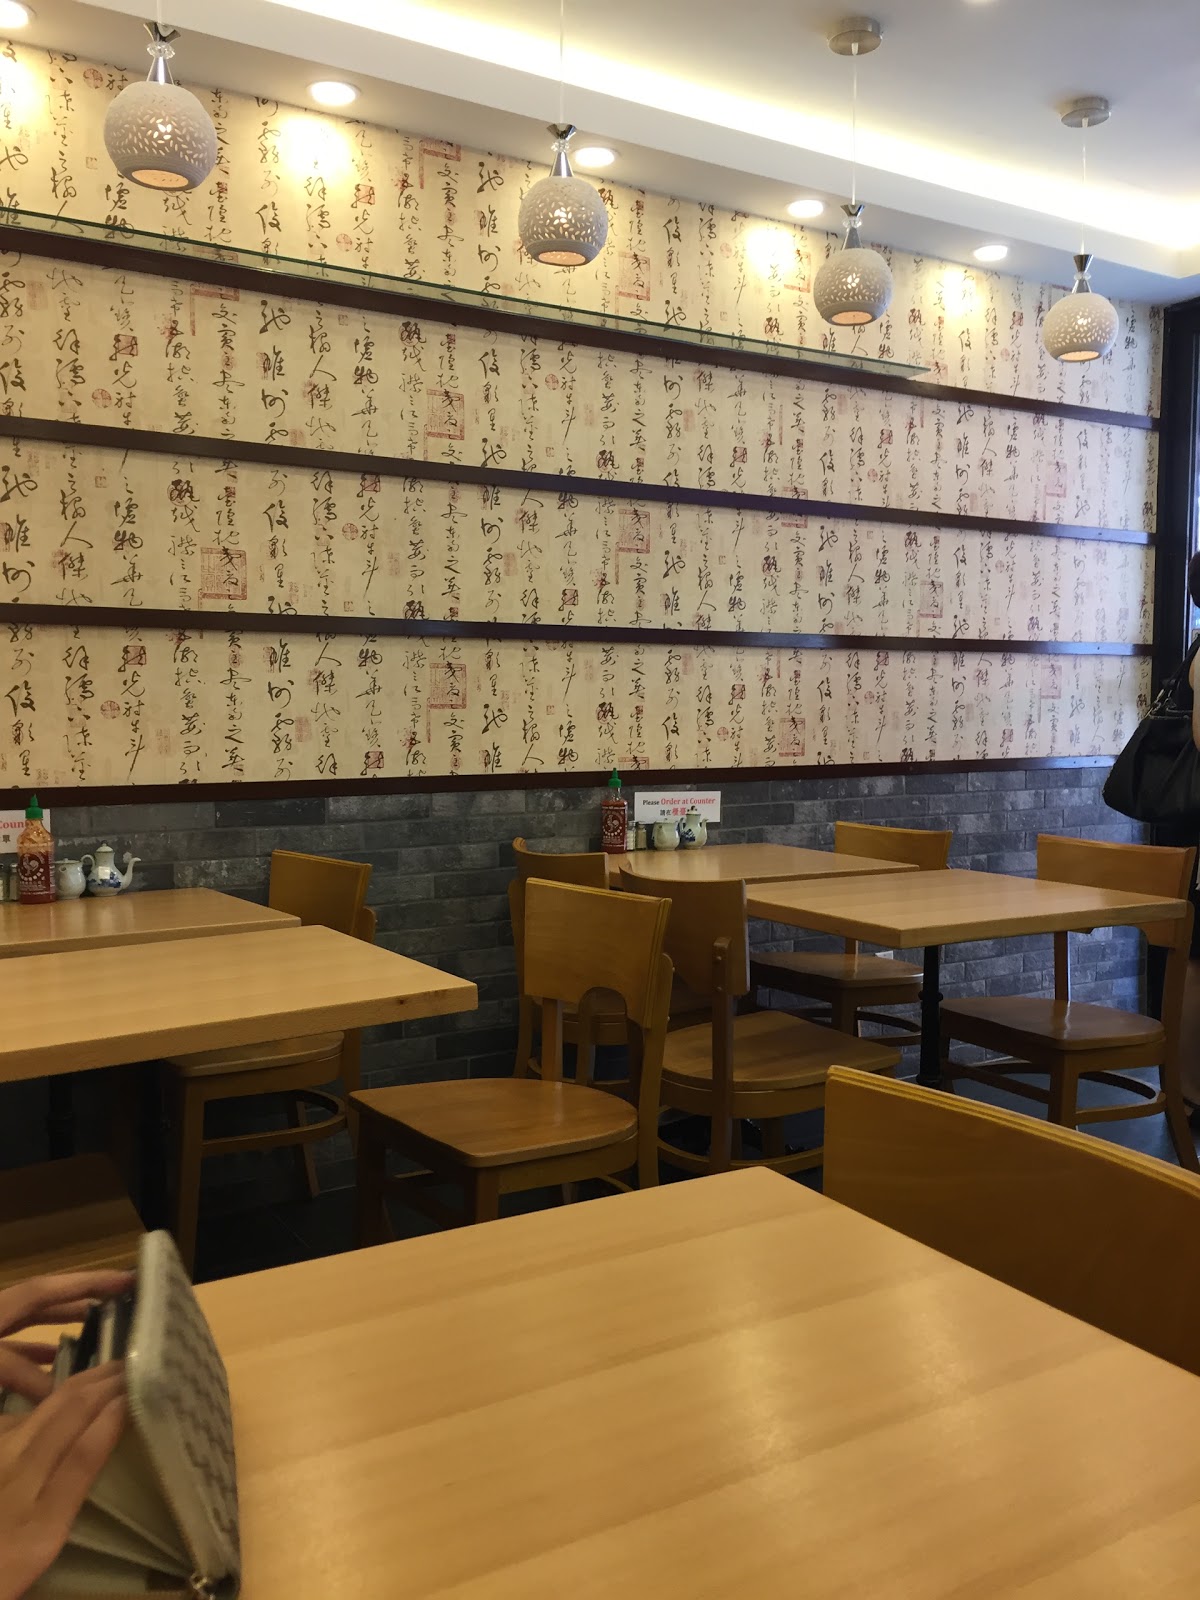 Photo of Taste of Shanghai in New York City, New York, United States - 4 Picture of Restaurant, Food, Point of interest, Establishment